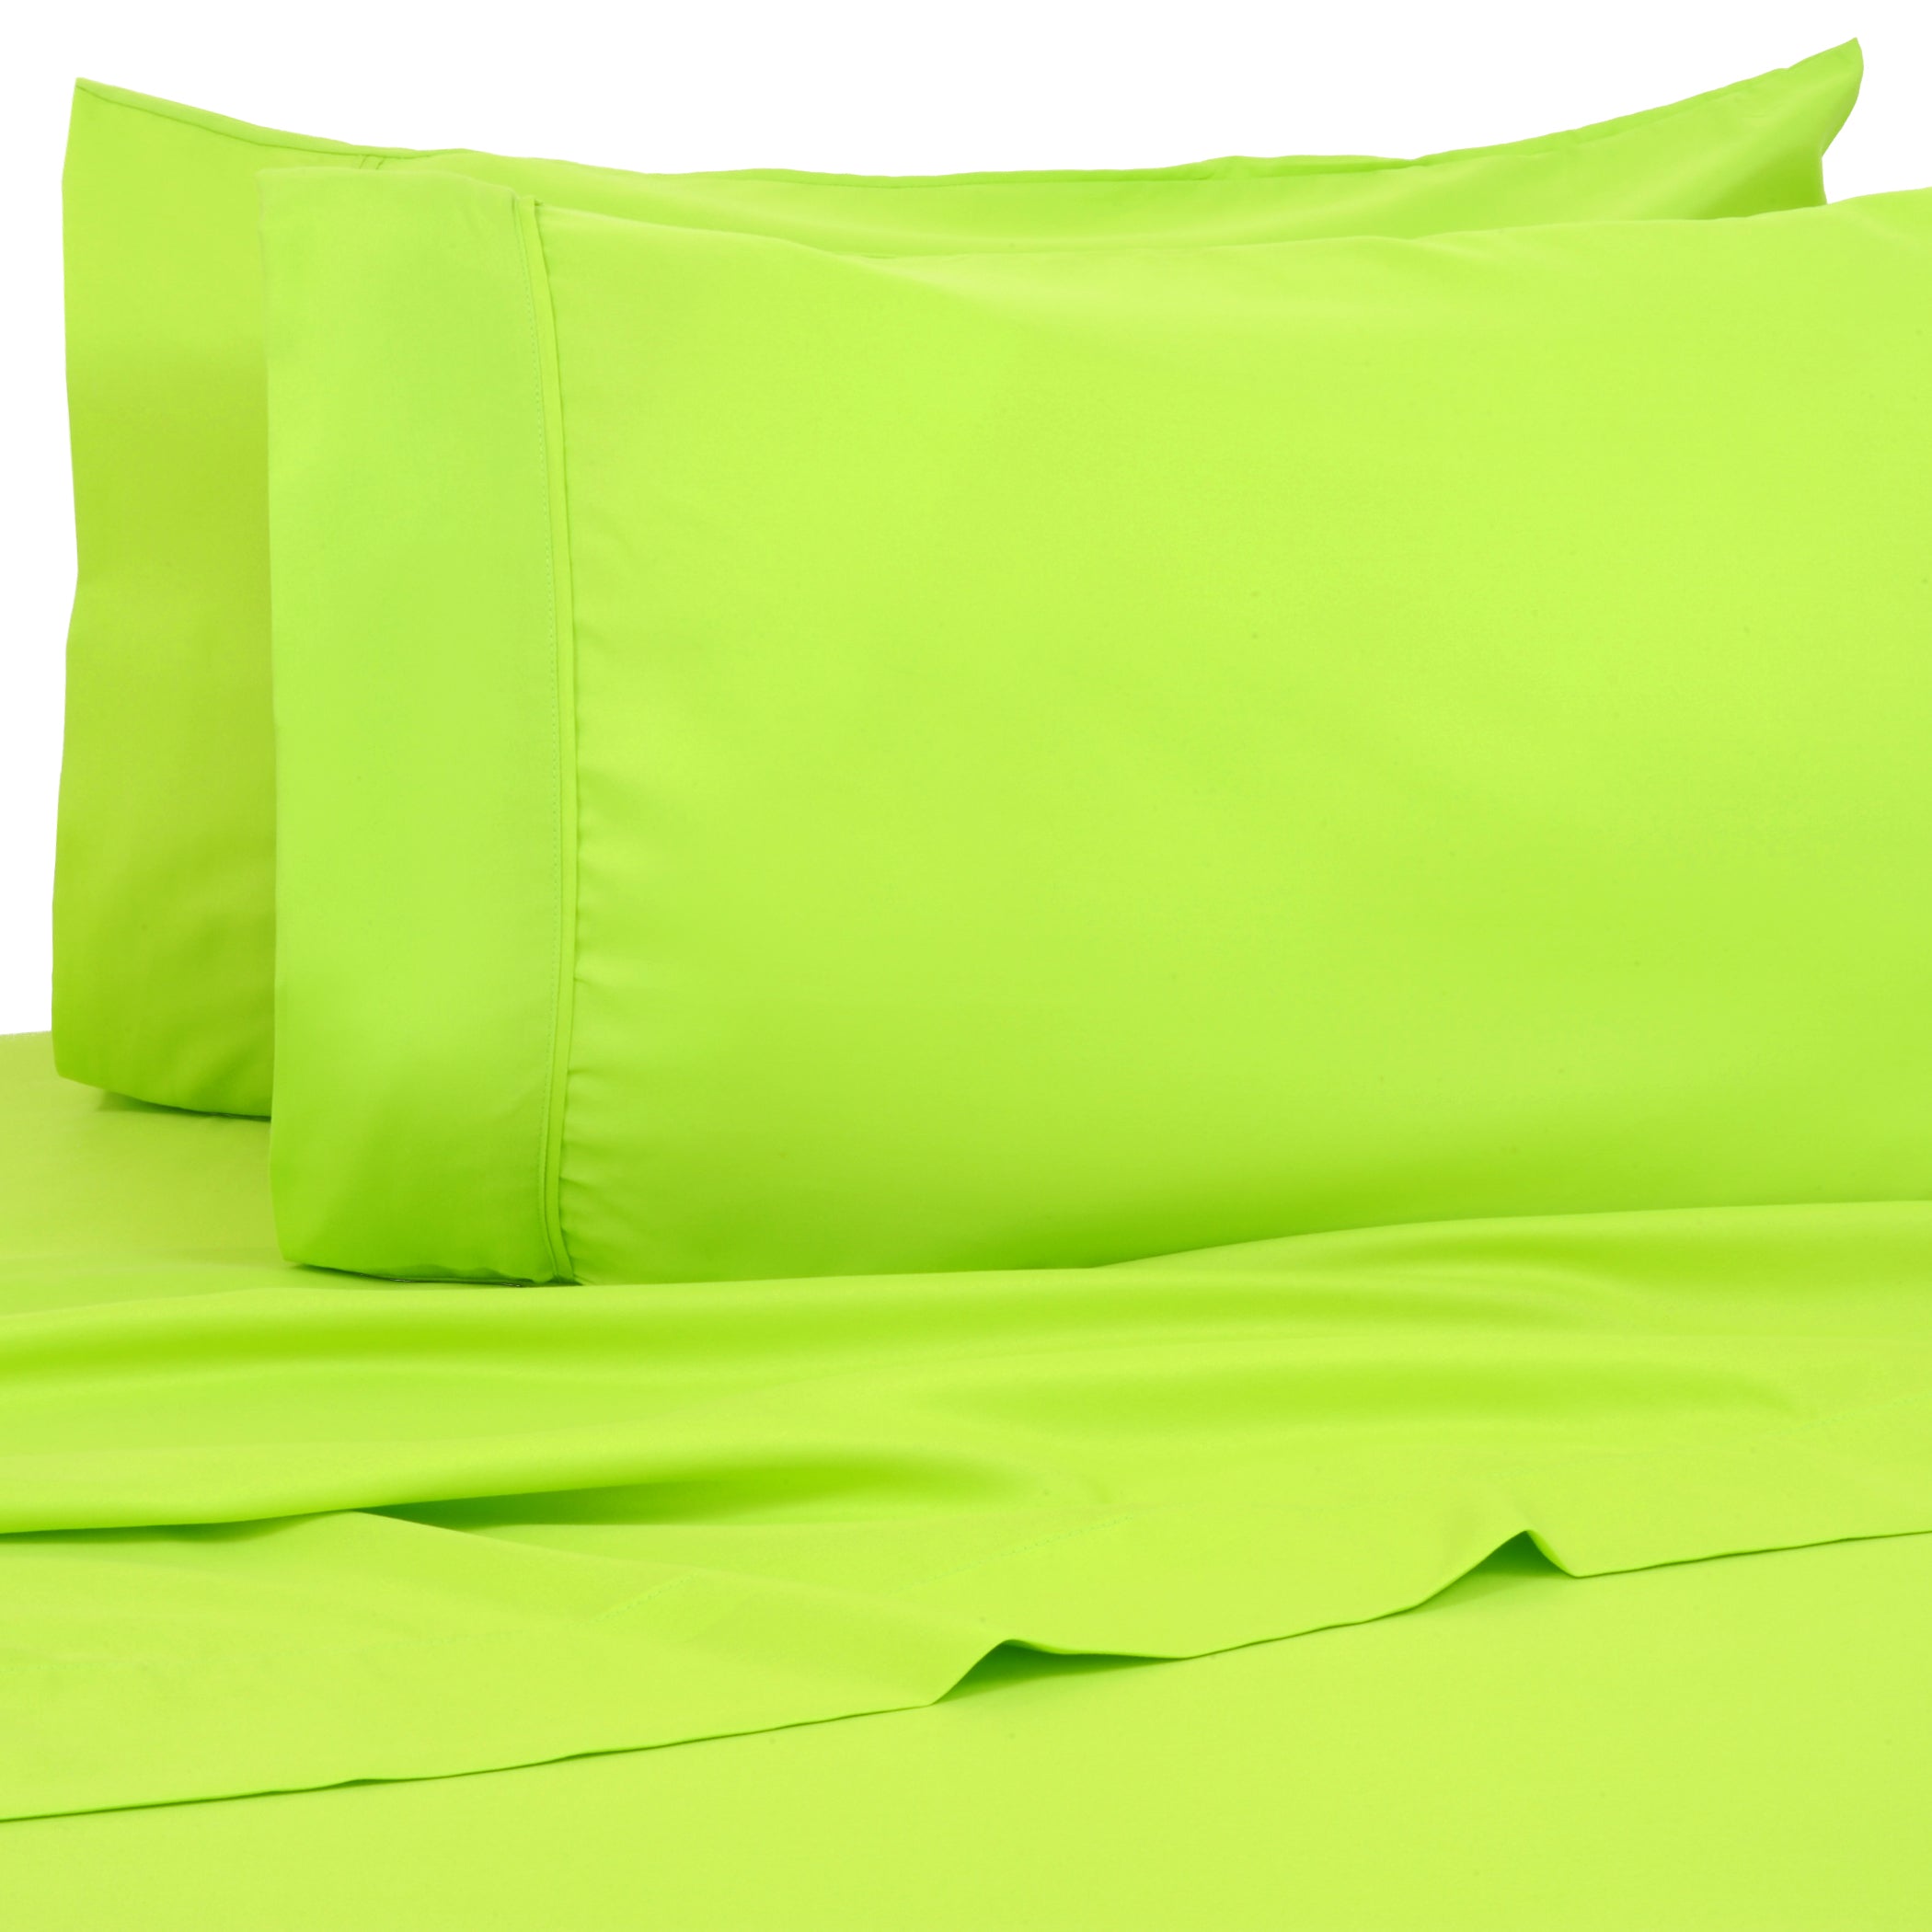 6 Piece Hotel Luxury Soft 1800 Series Premium Bed Sheets Set, Deep Pockets, Hypo